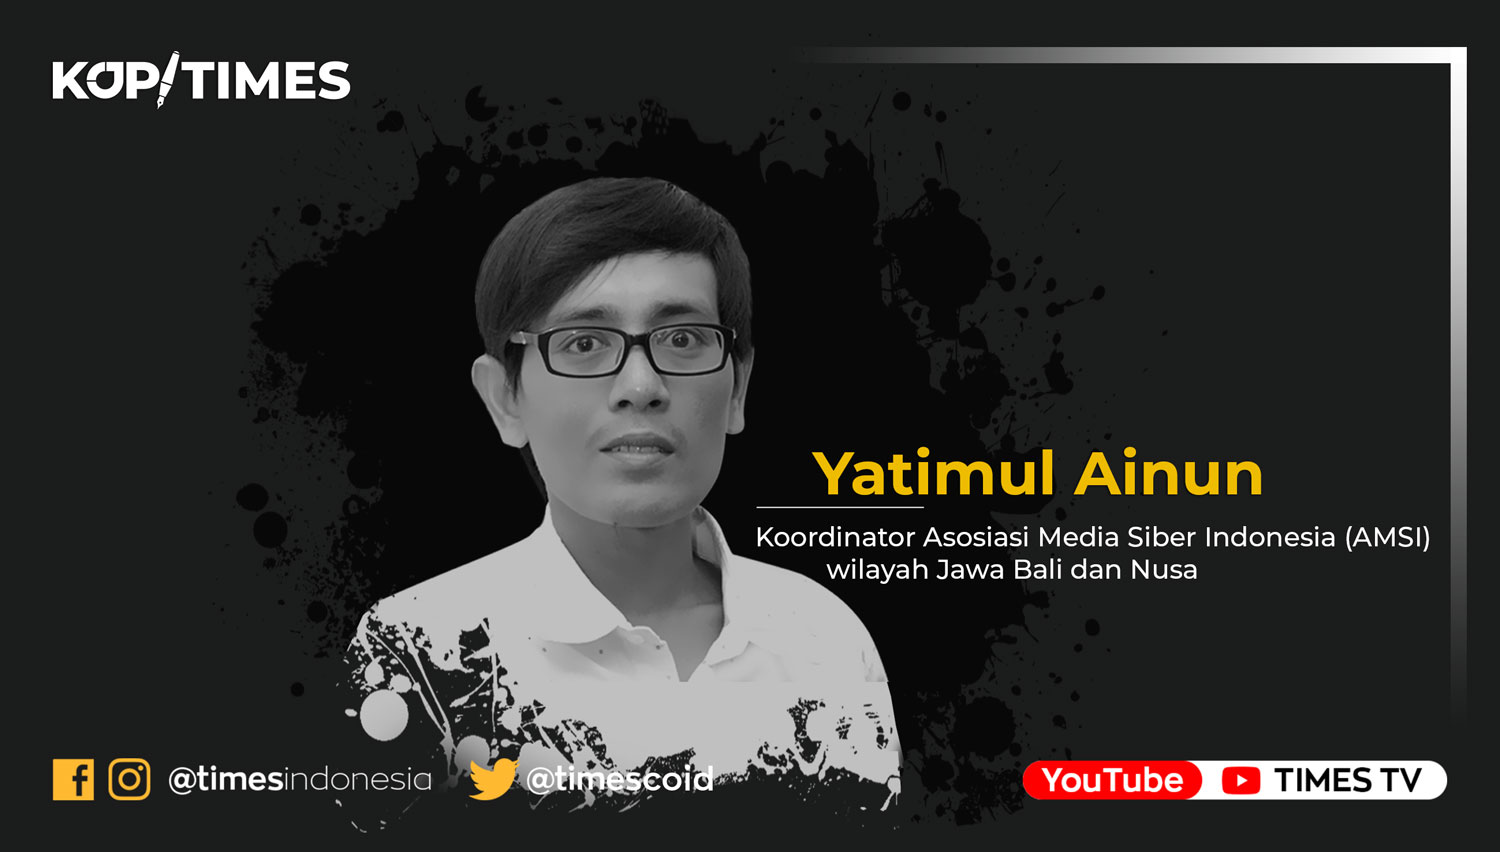 Yatimul Ainun, Koordinator Asosiasi Media Siber Indonesia (AMSI) wilayah Jawa Bali dan Nusa